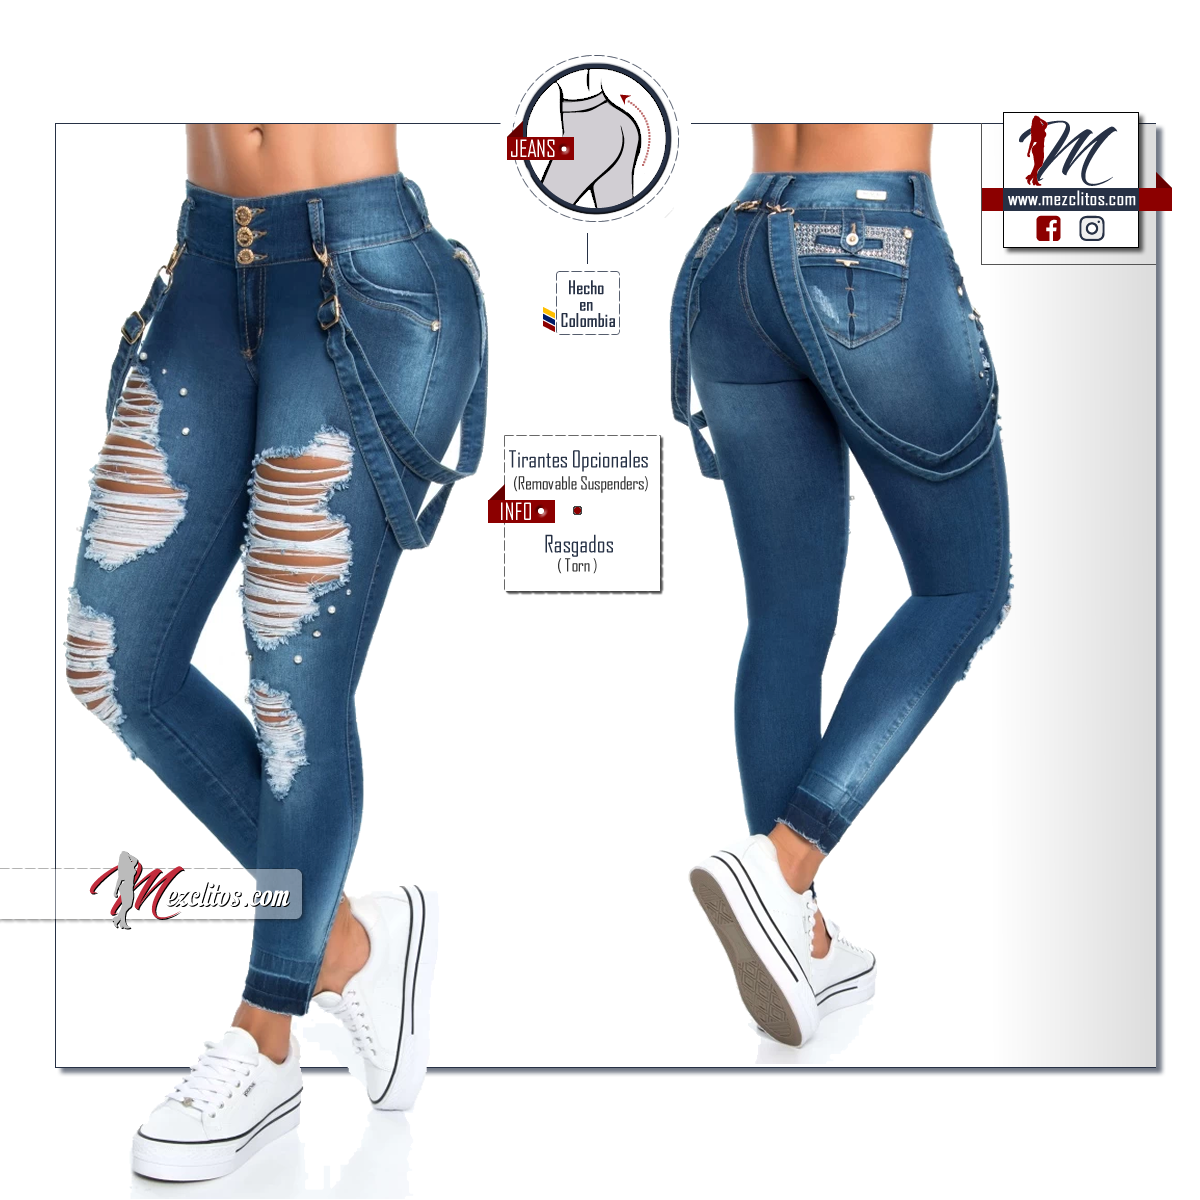 Pantalones Colombianos, Do Jeans